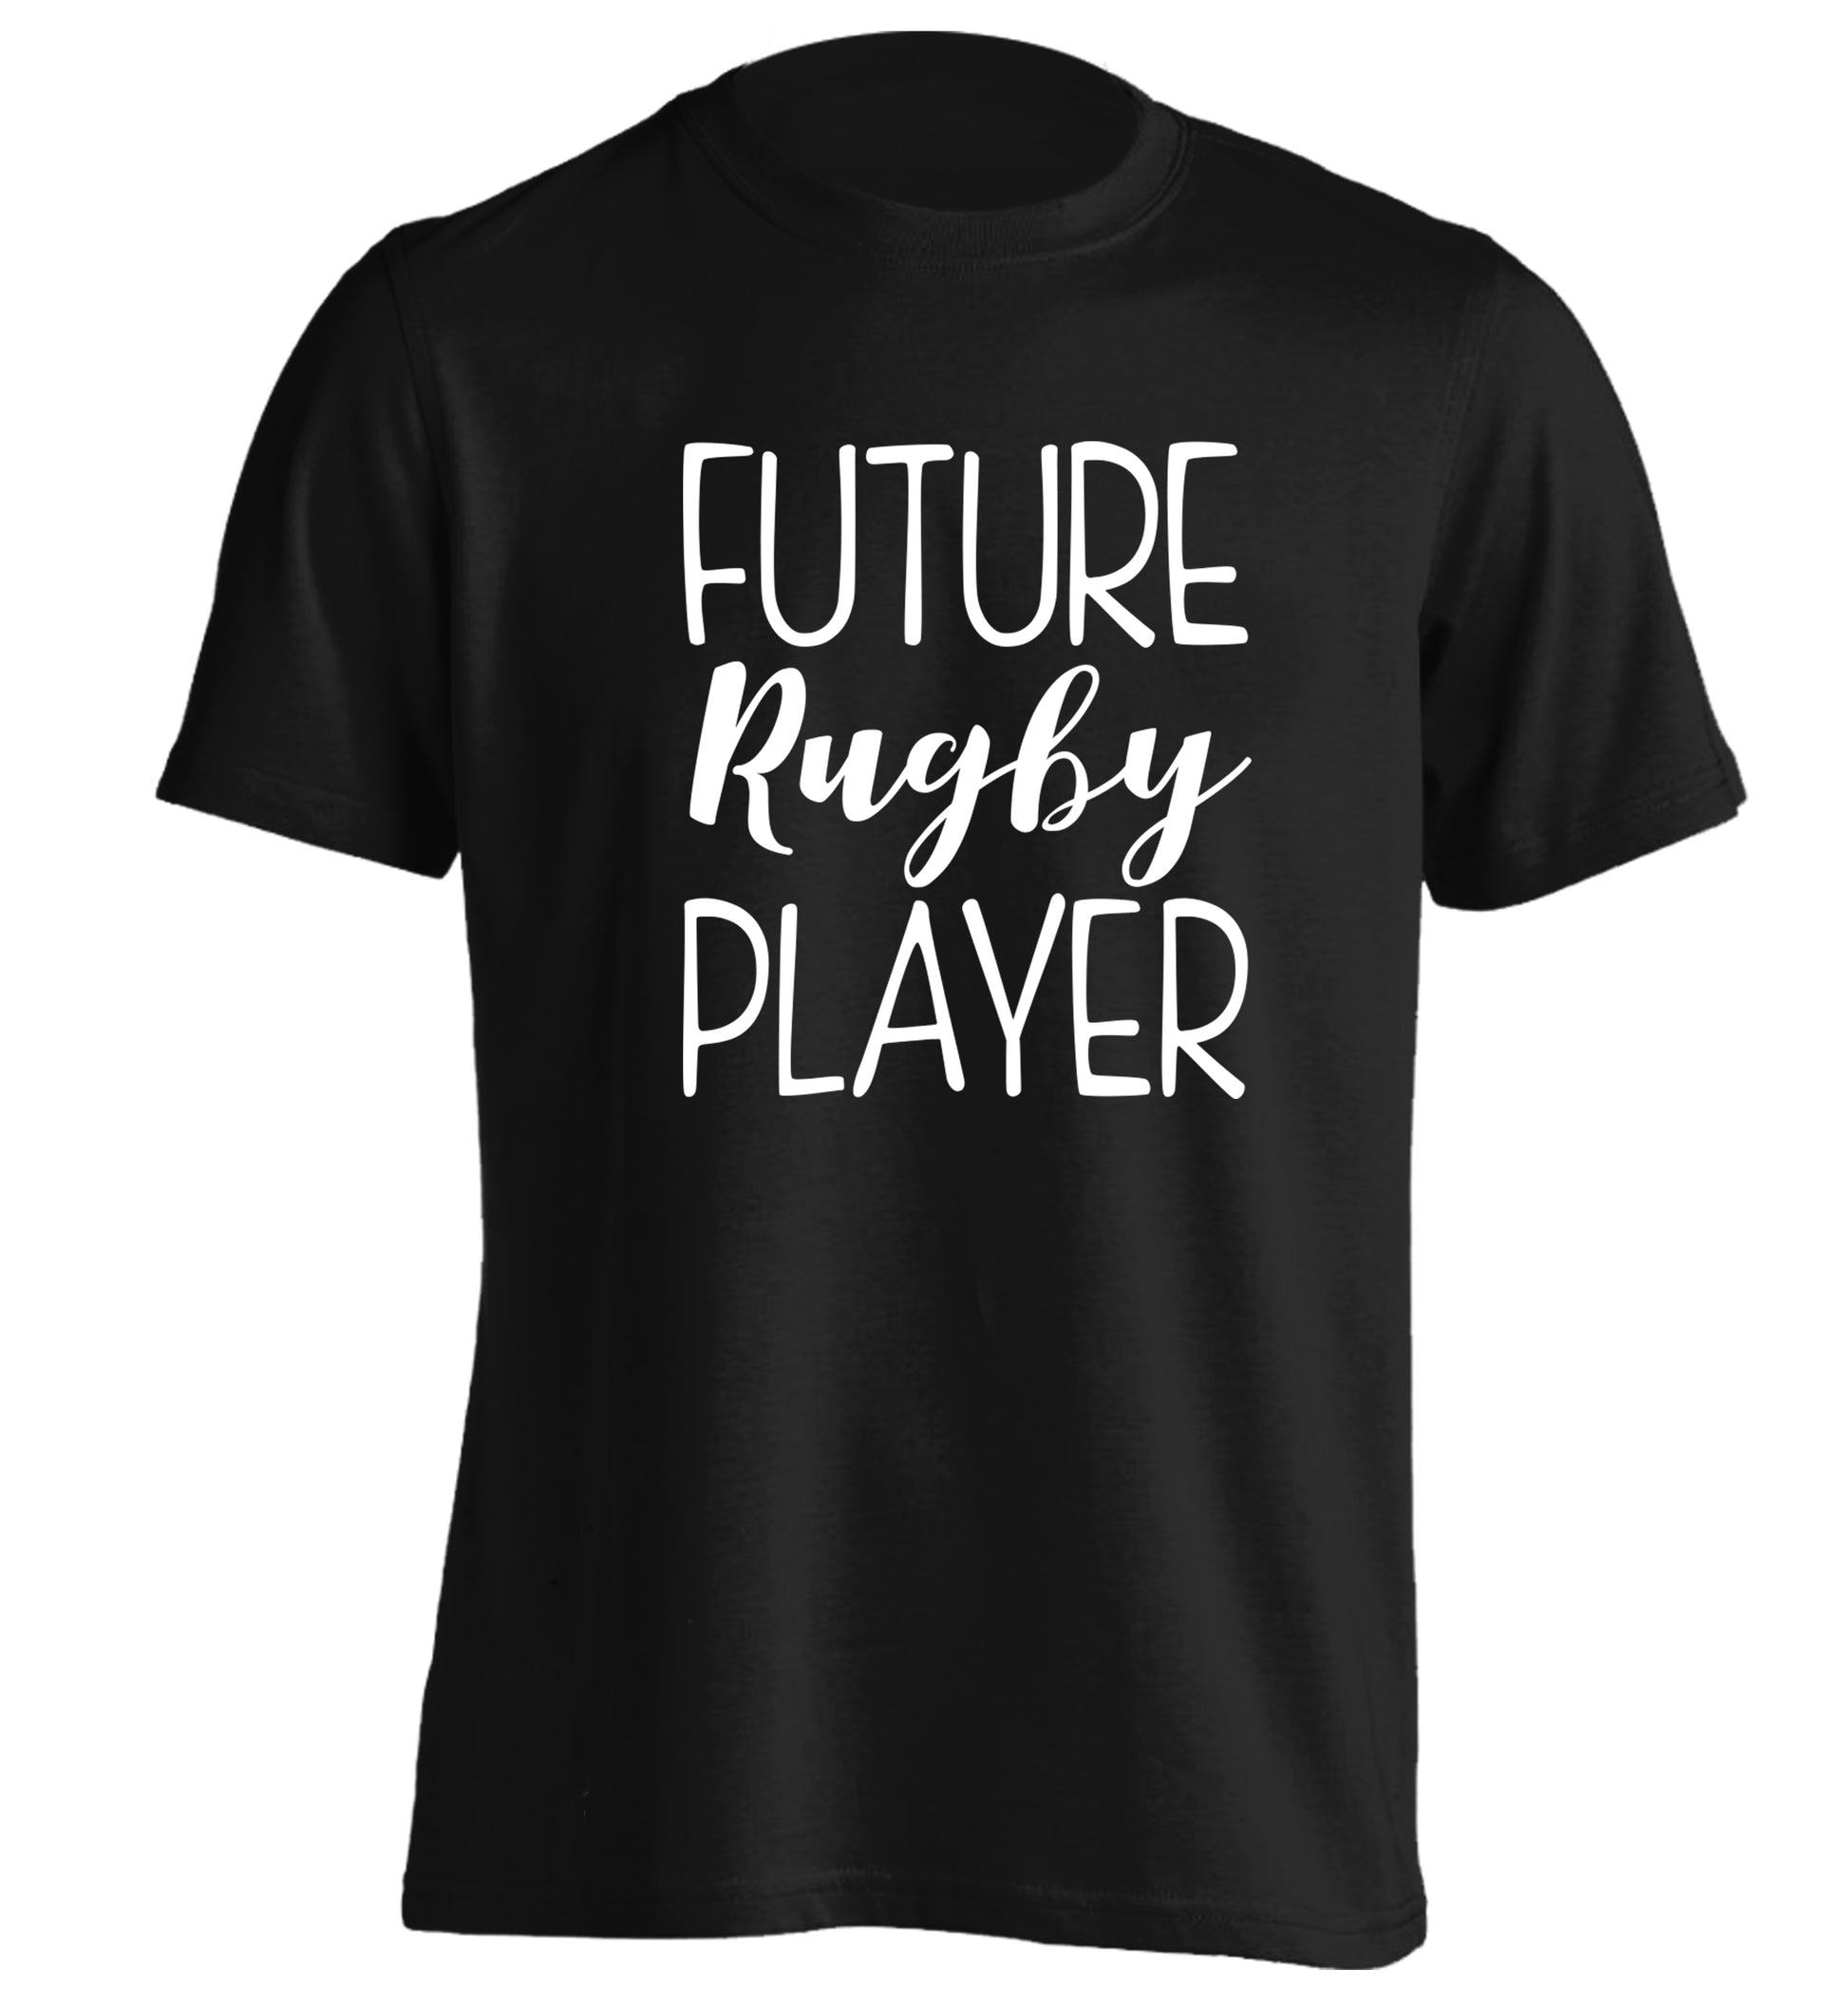 Future rugby player adults unisex black Tshirt 2XL